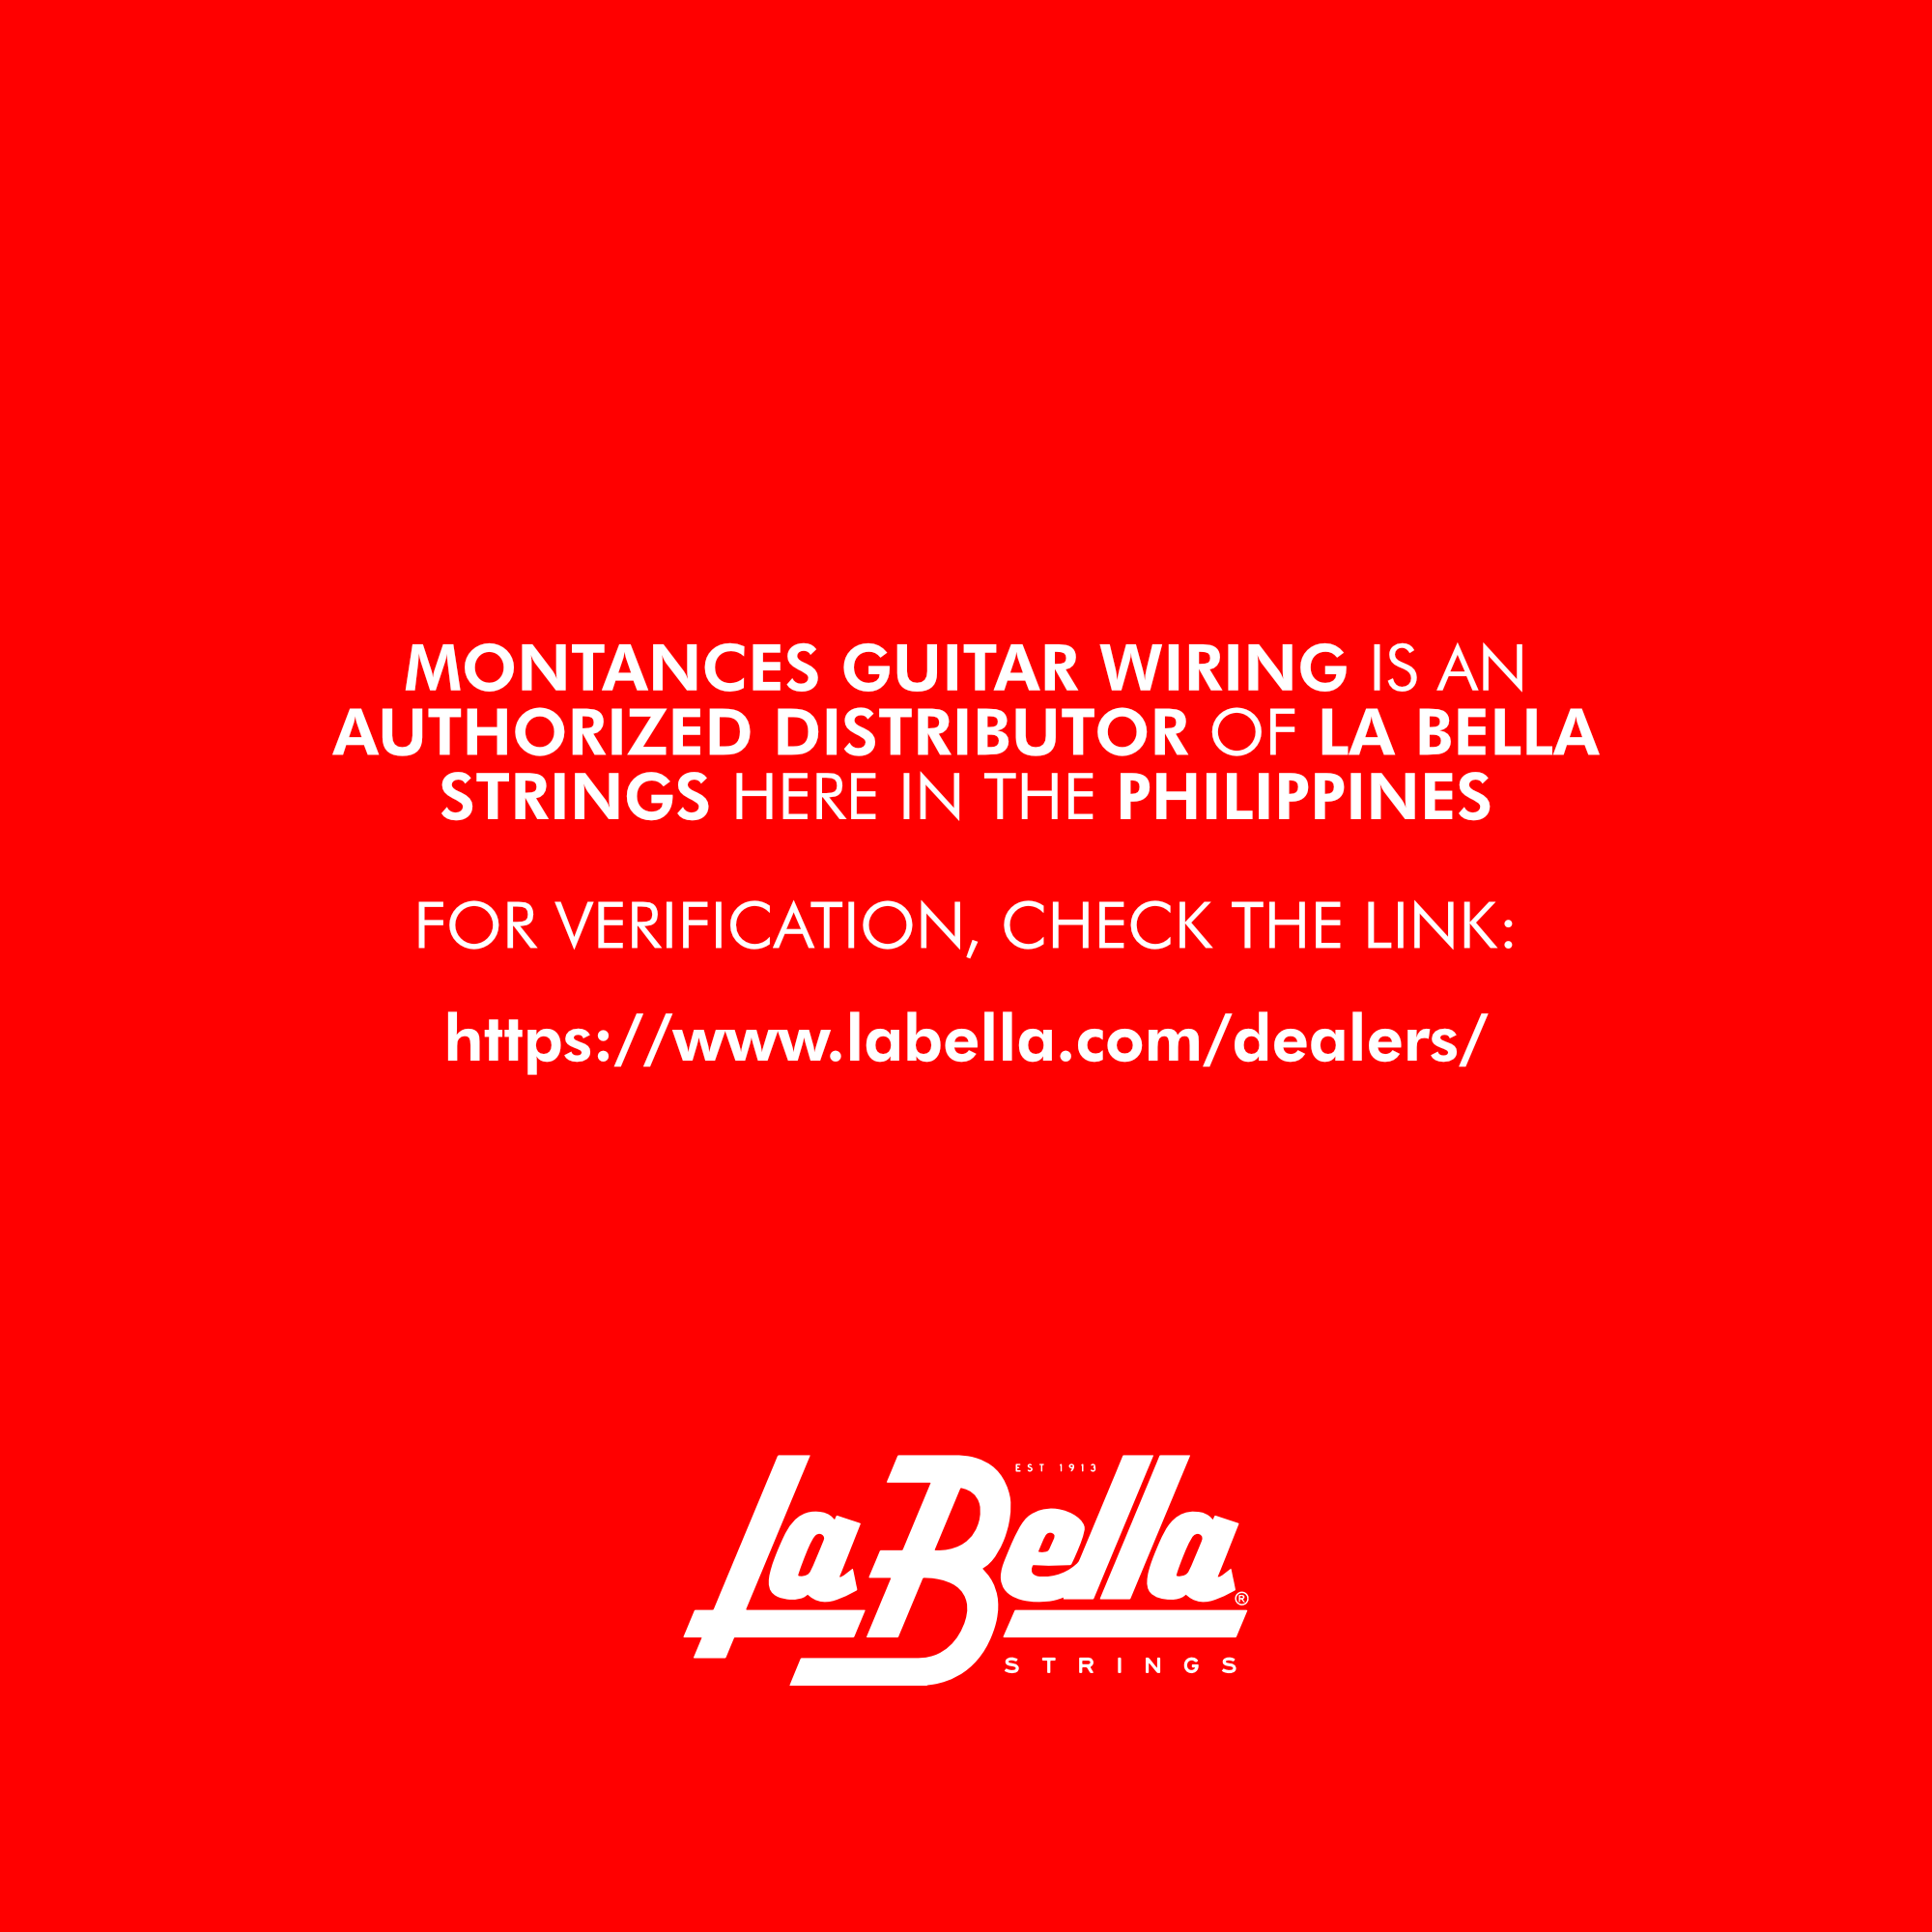 La Bella 900-B Elite - Black Nylon, Polished Golden Alloy - Classical Guitar Strings